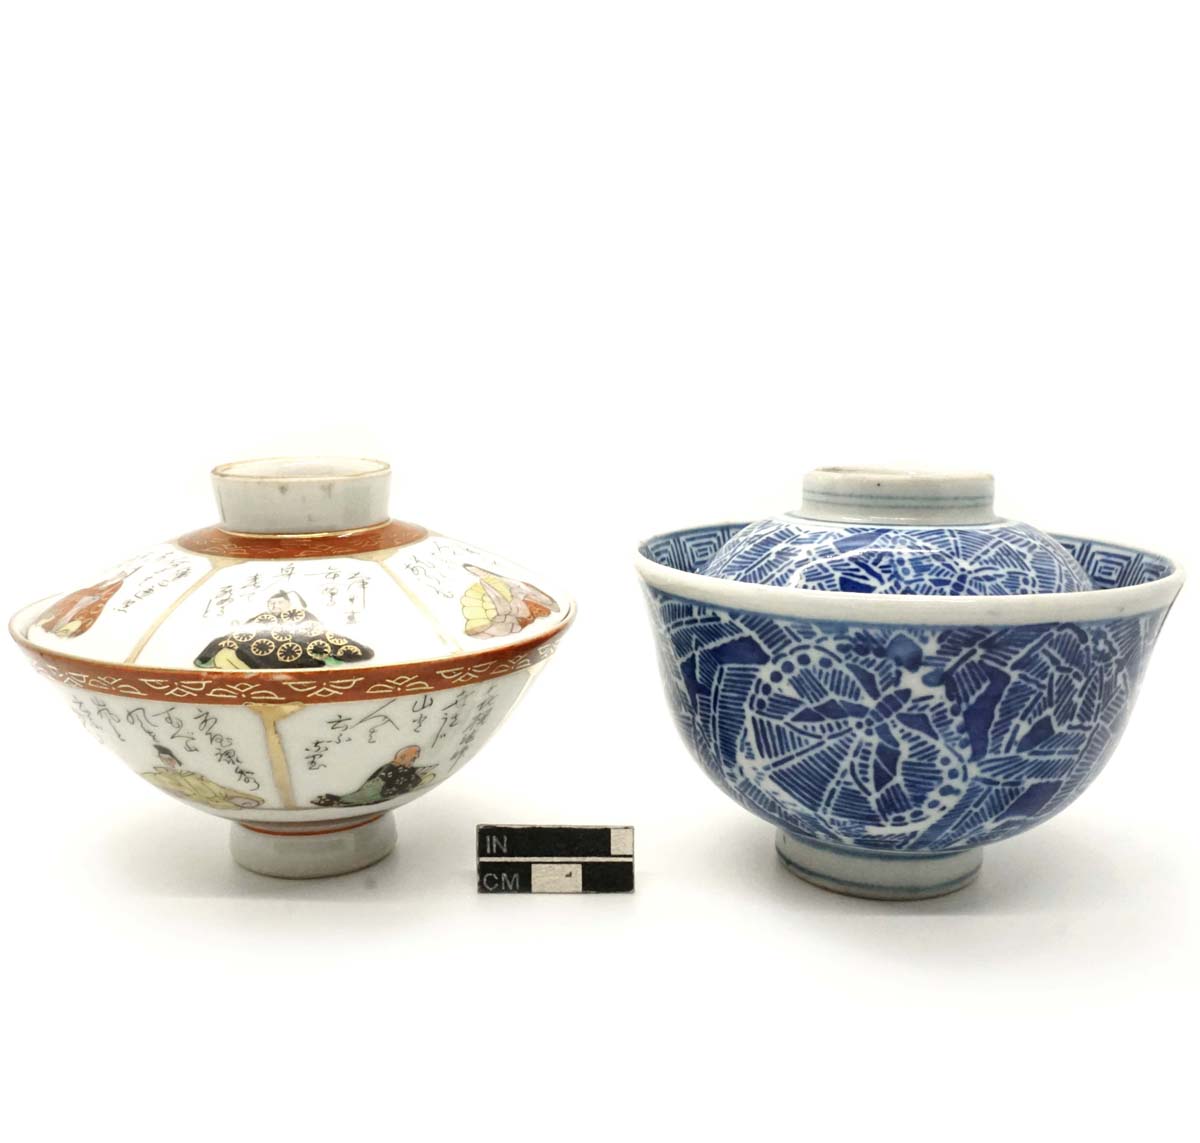 Rice bowls (gohan chawan) with lids (futa), porcelain.